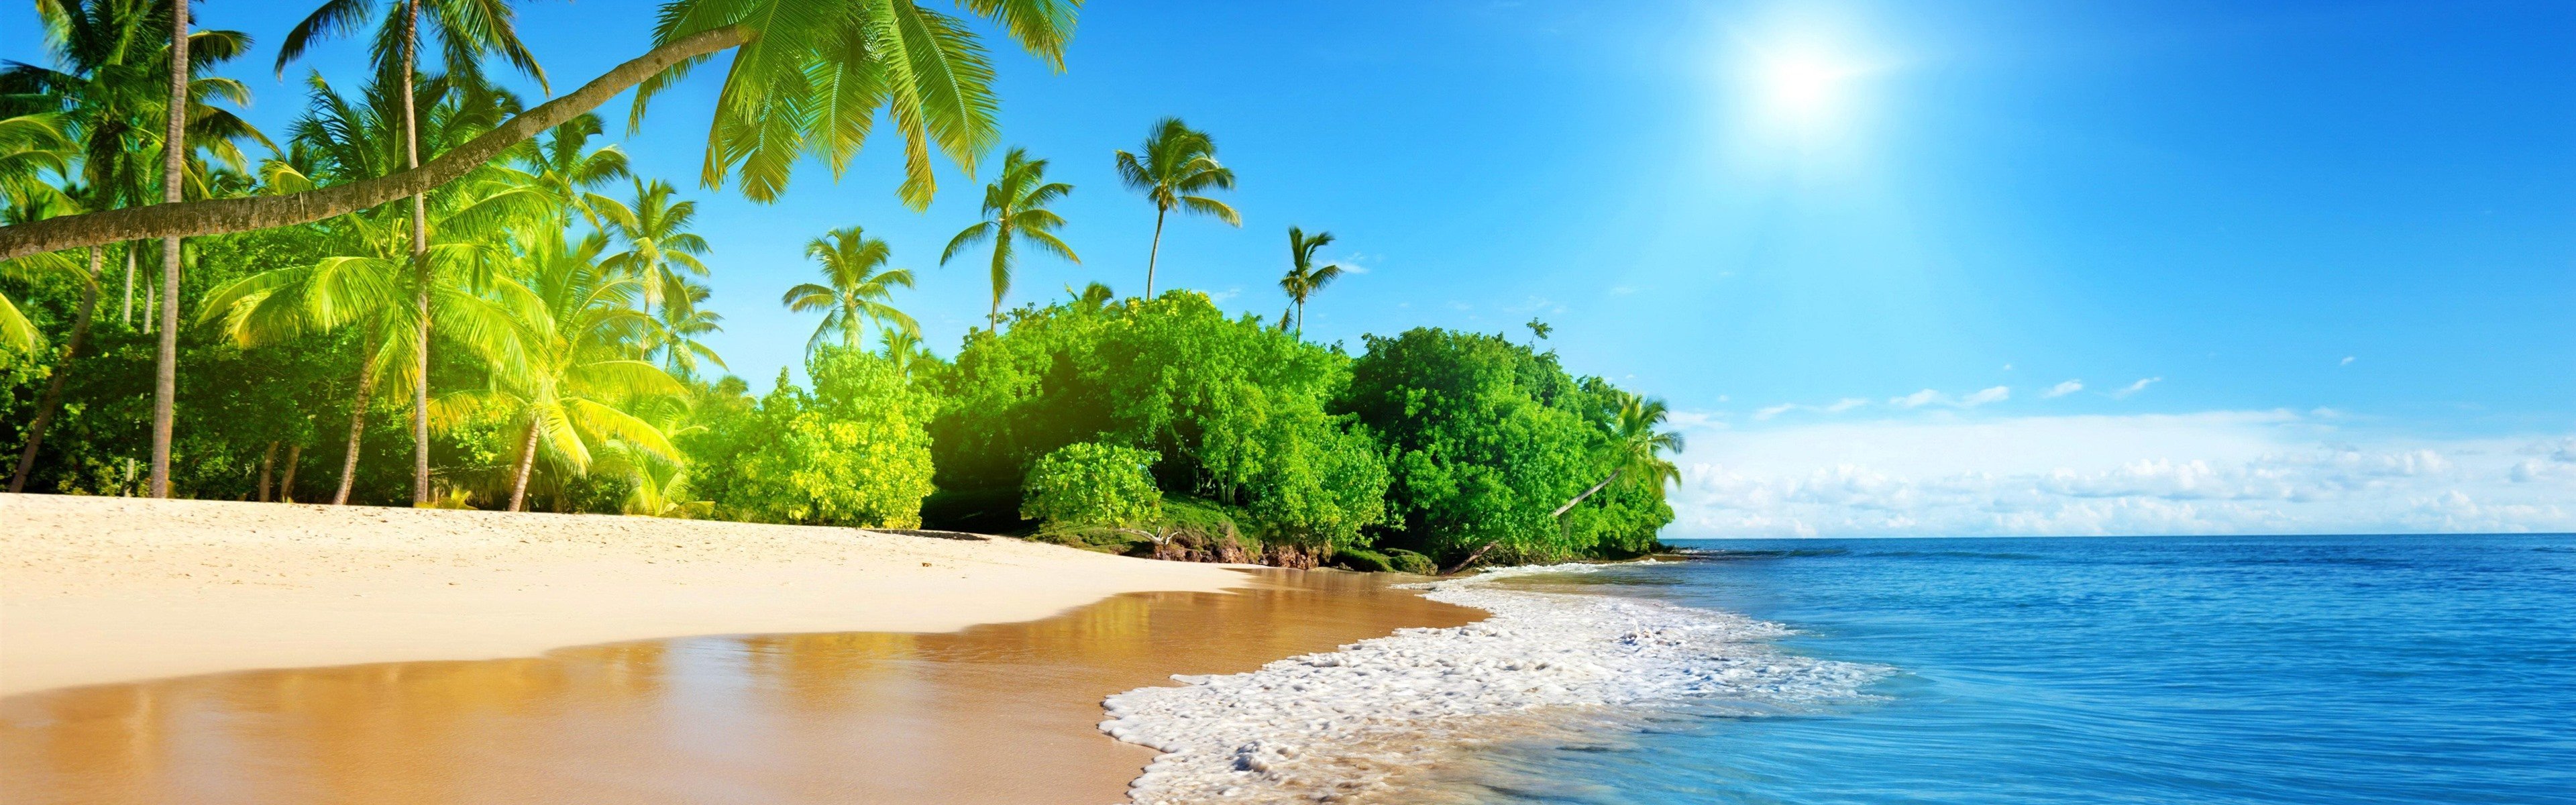 Wallpapers Beautiful beach, palm trees, sea, sunshine, tropical